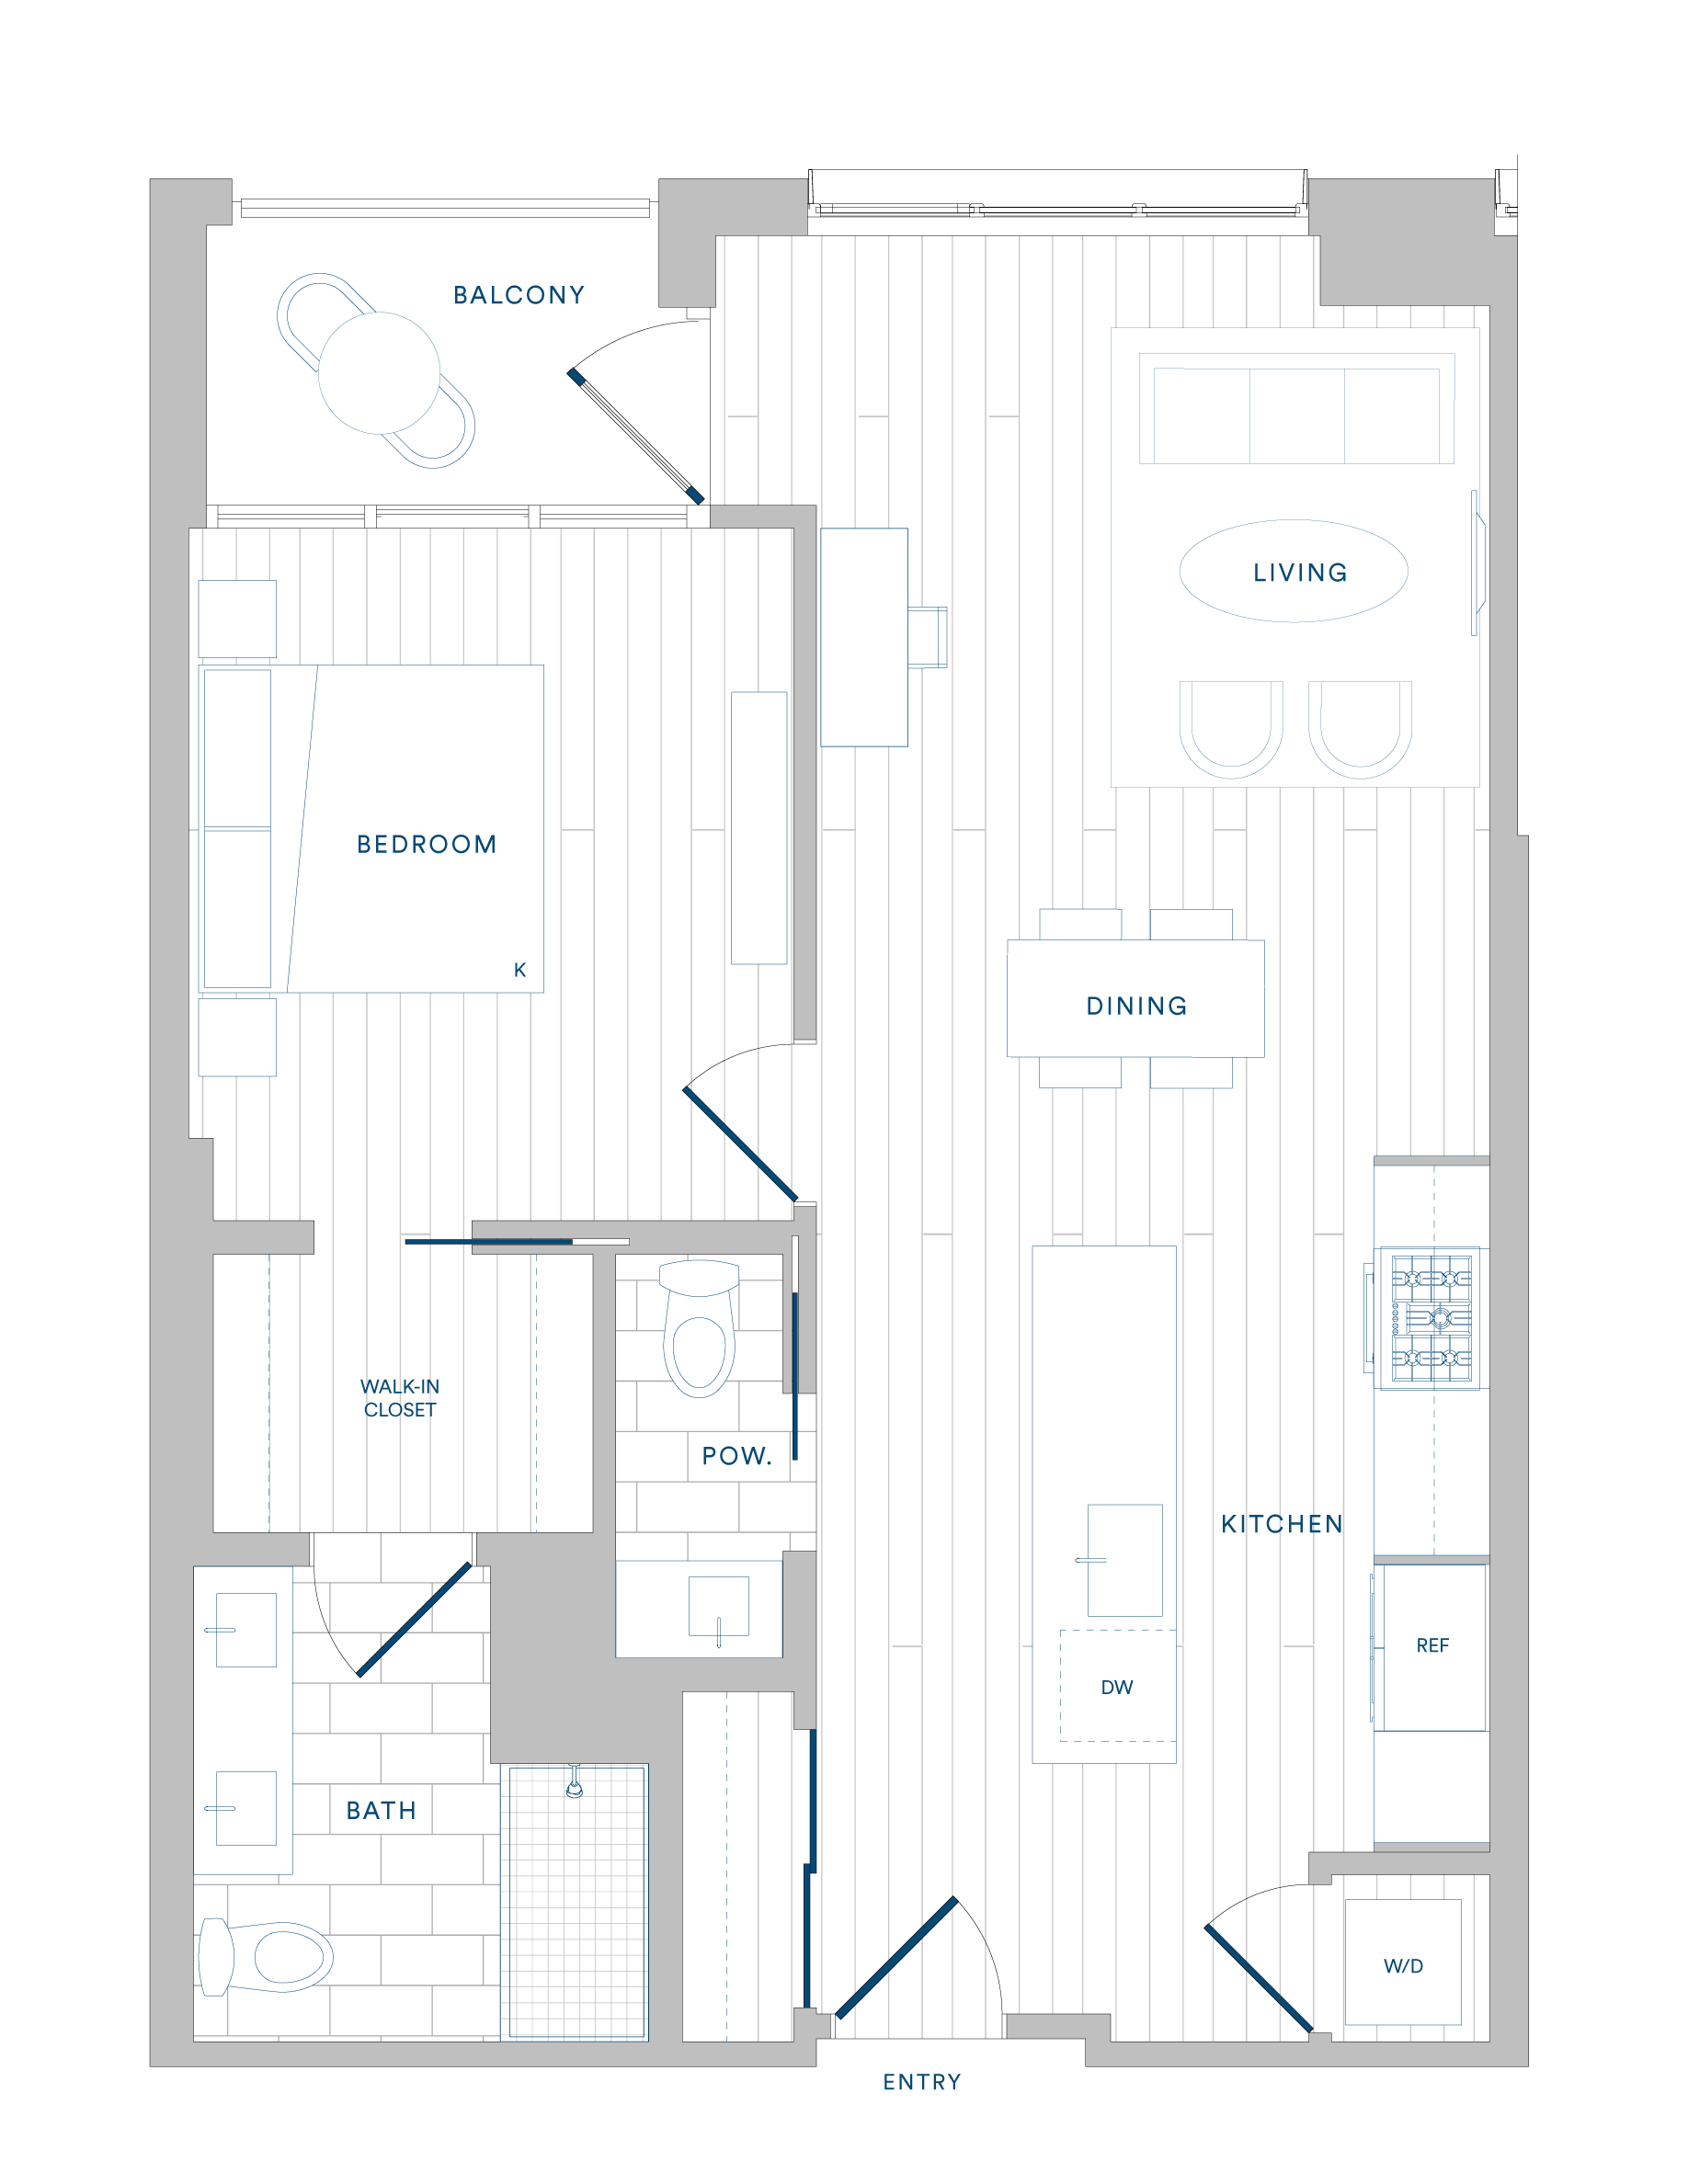 Floorplan for Apartment #1309, 1 bedroom unit at Margarite